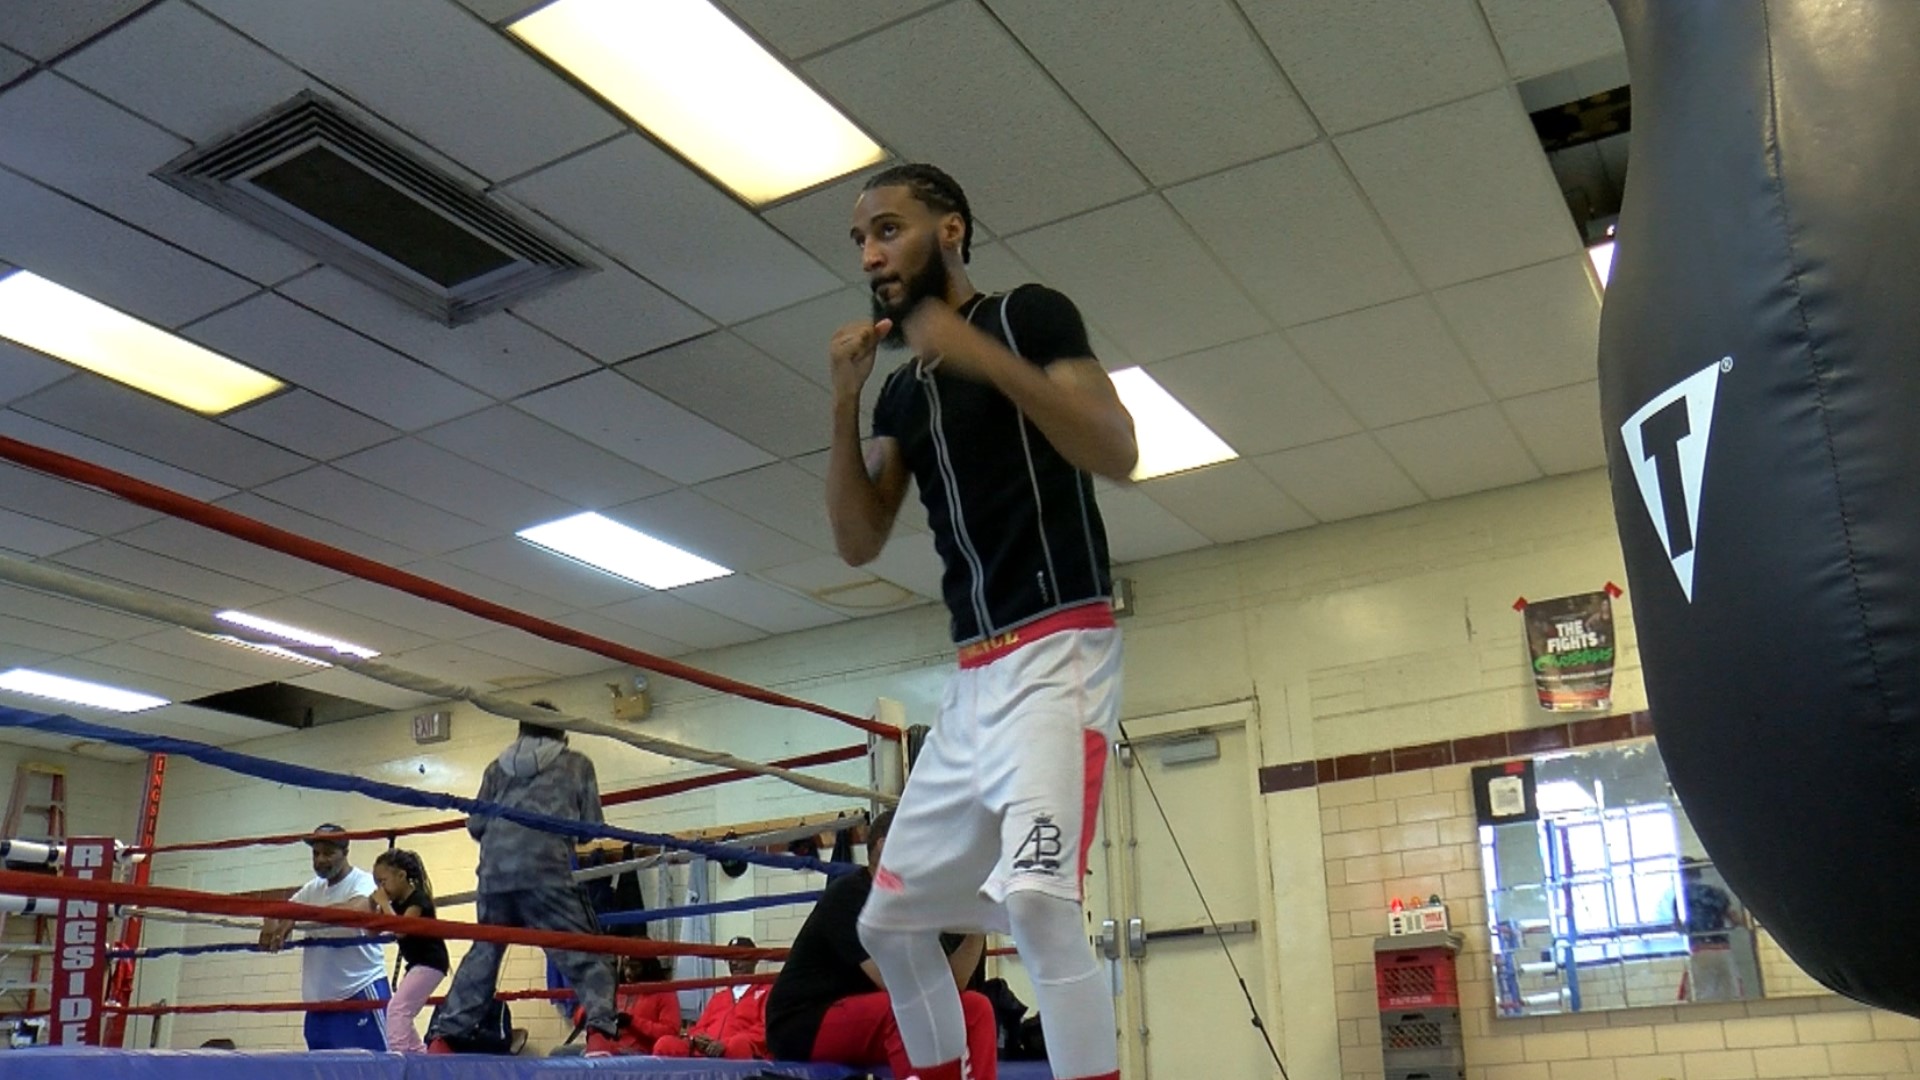 Body Shot Boxing brings big fight card to Manalapan